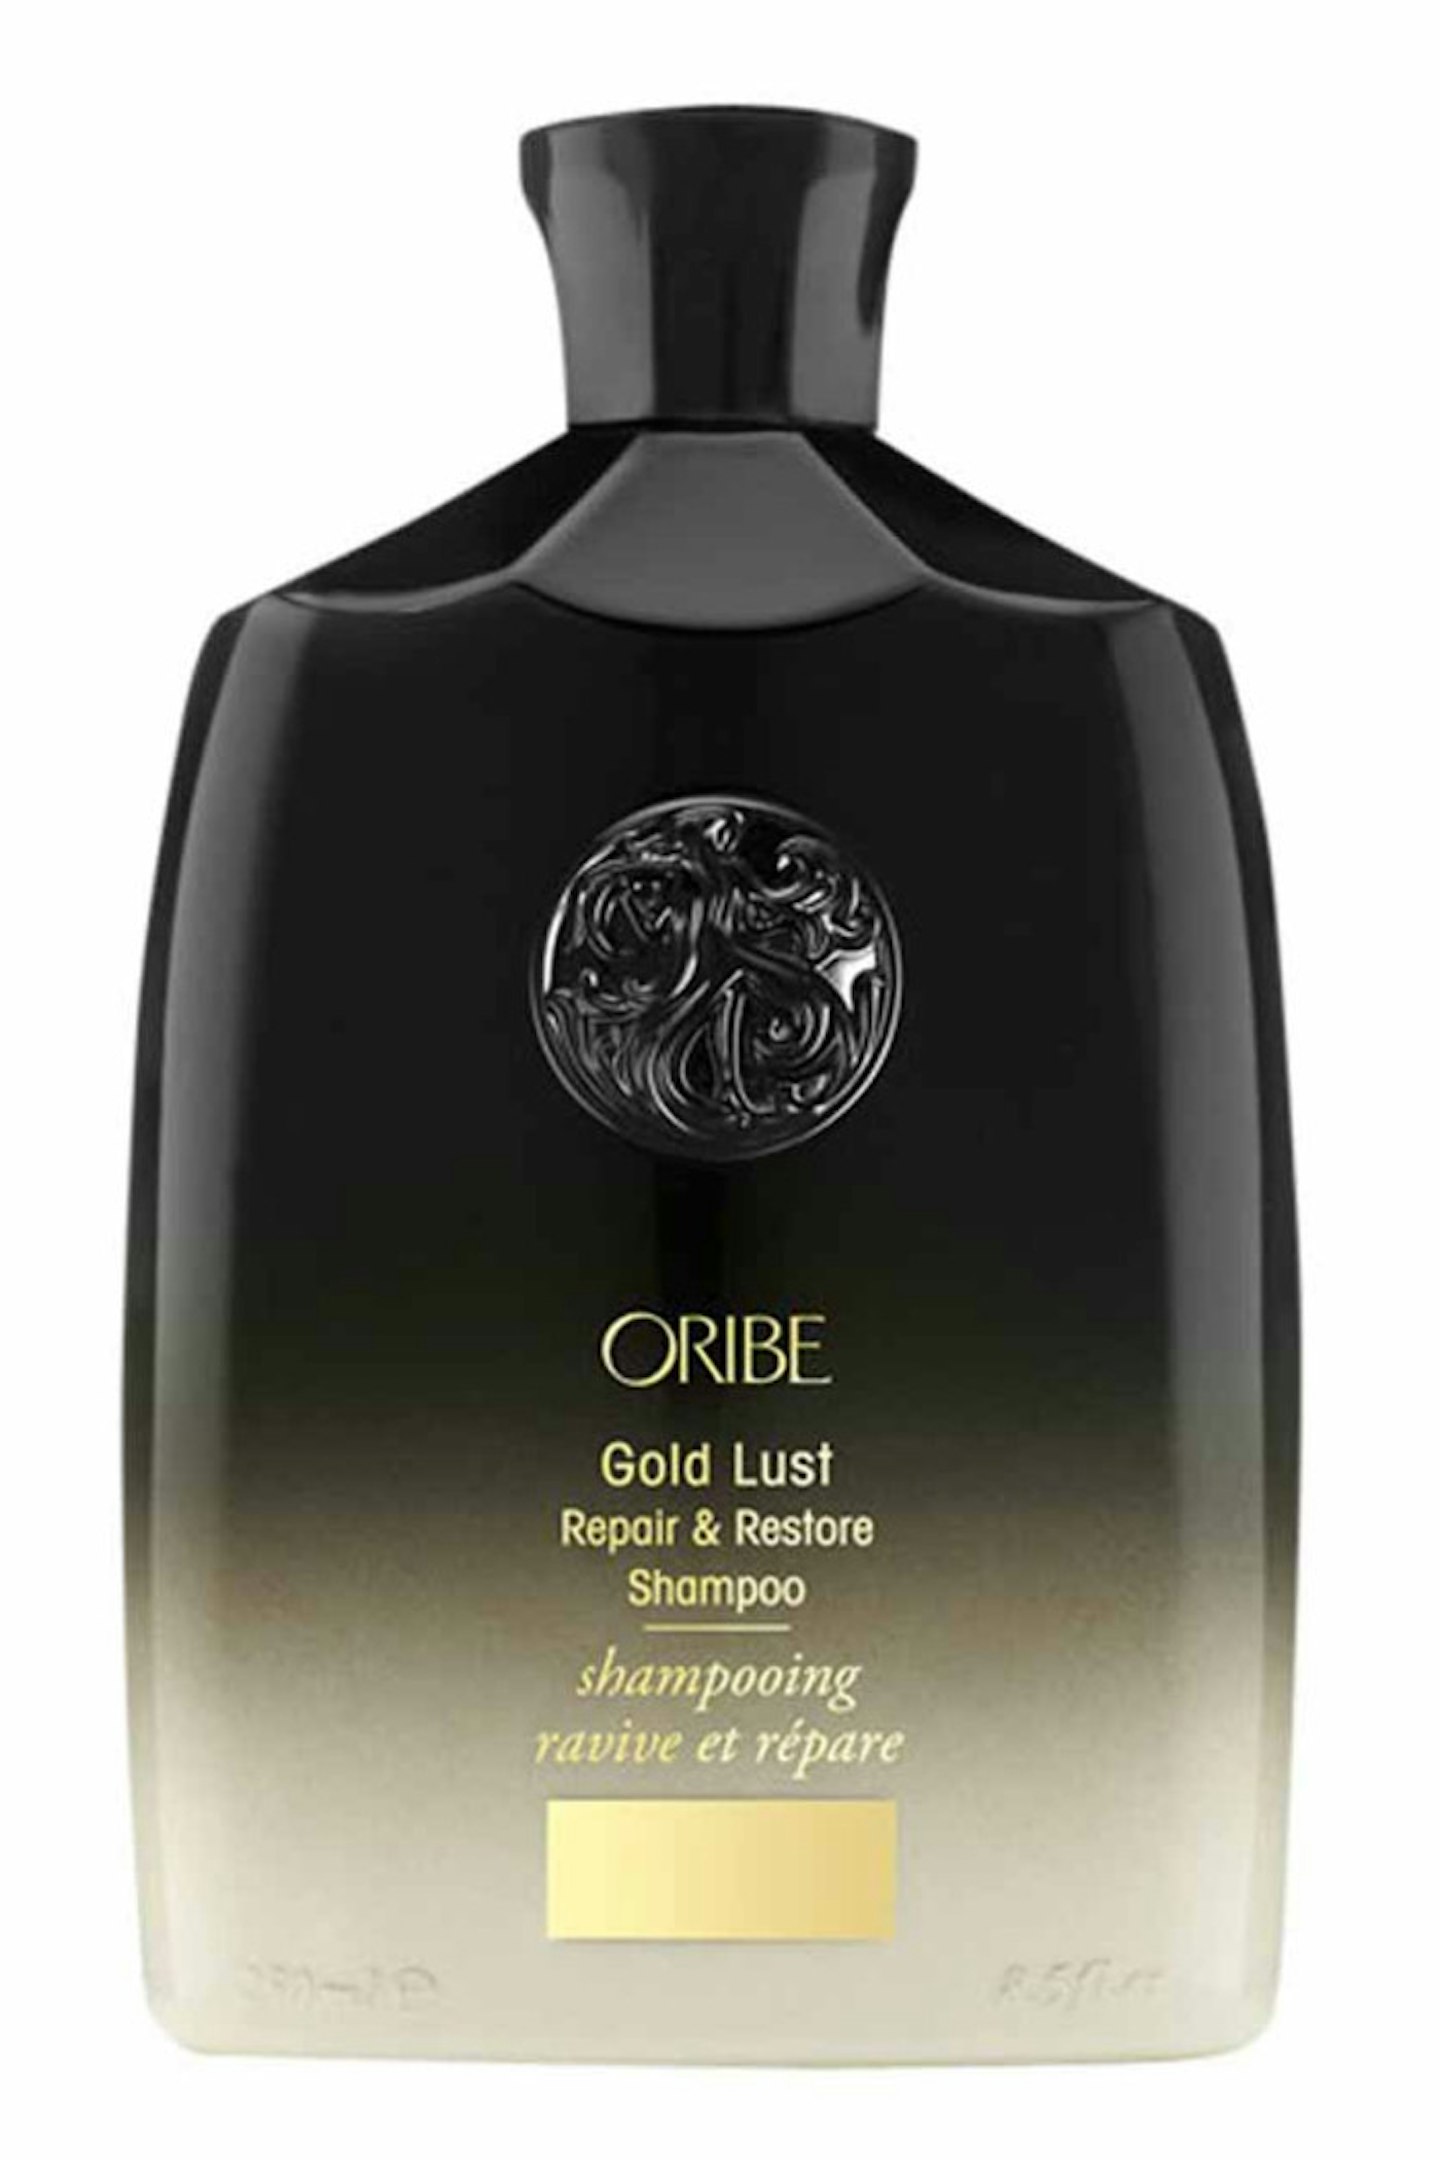 8. Oribe Gold Lust Repair & Restore Shampoo, £46